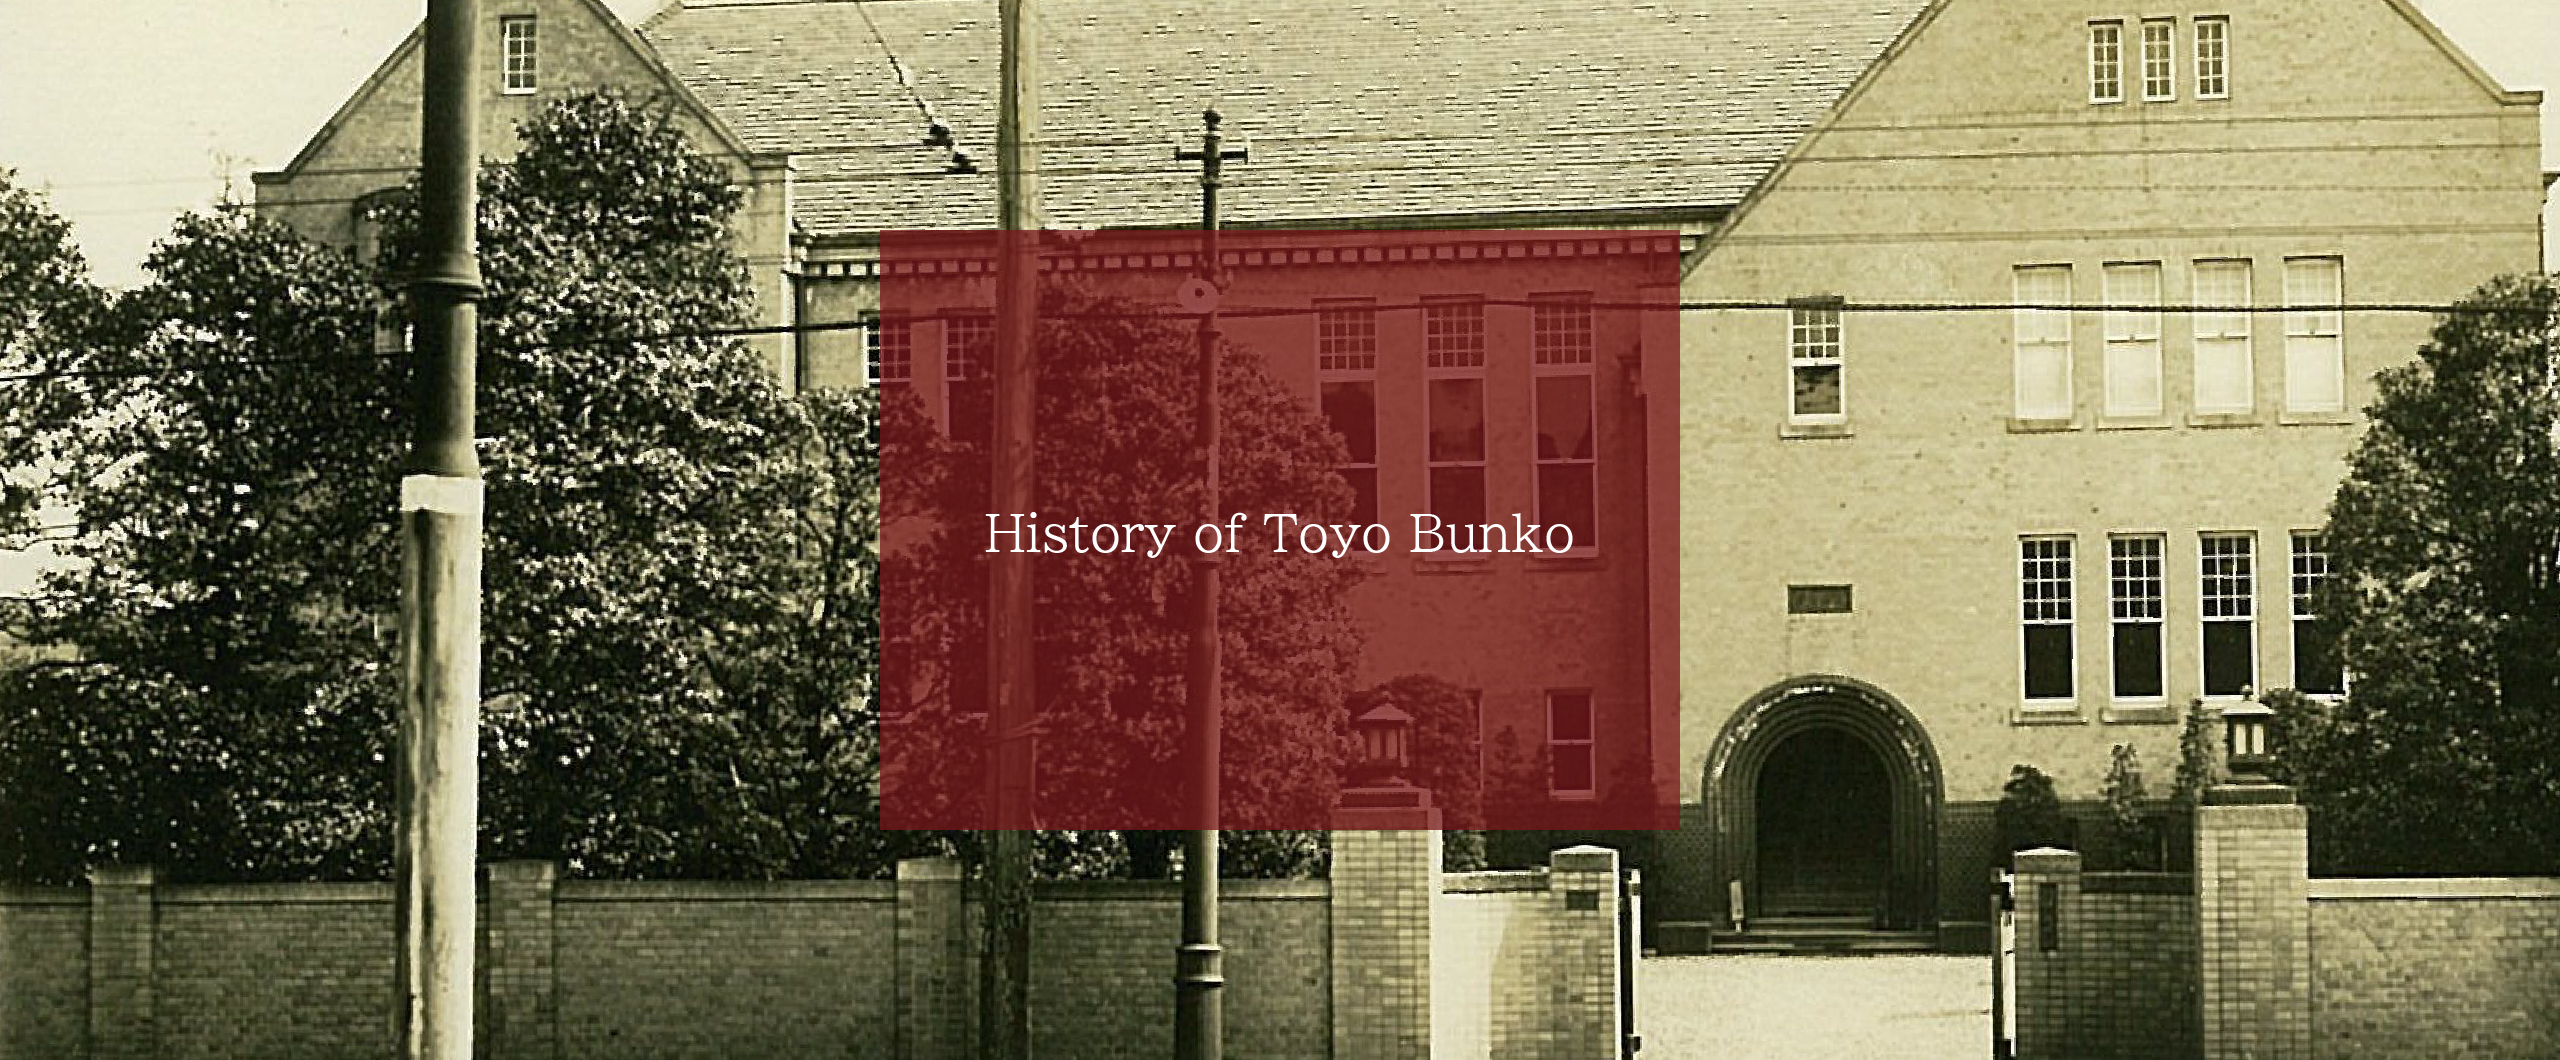 History of Toyo Bunko